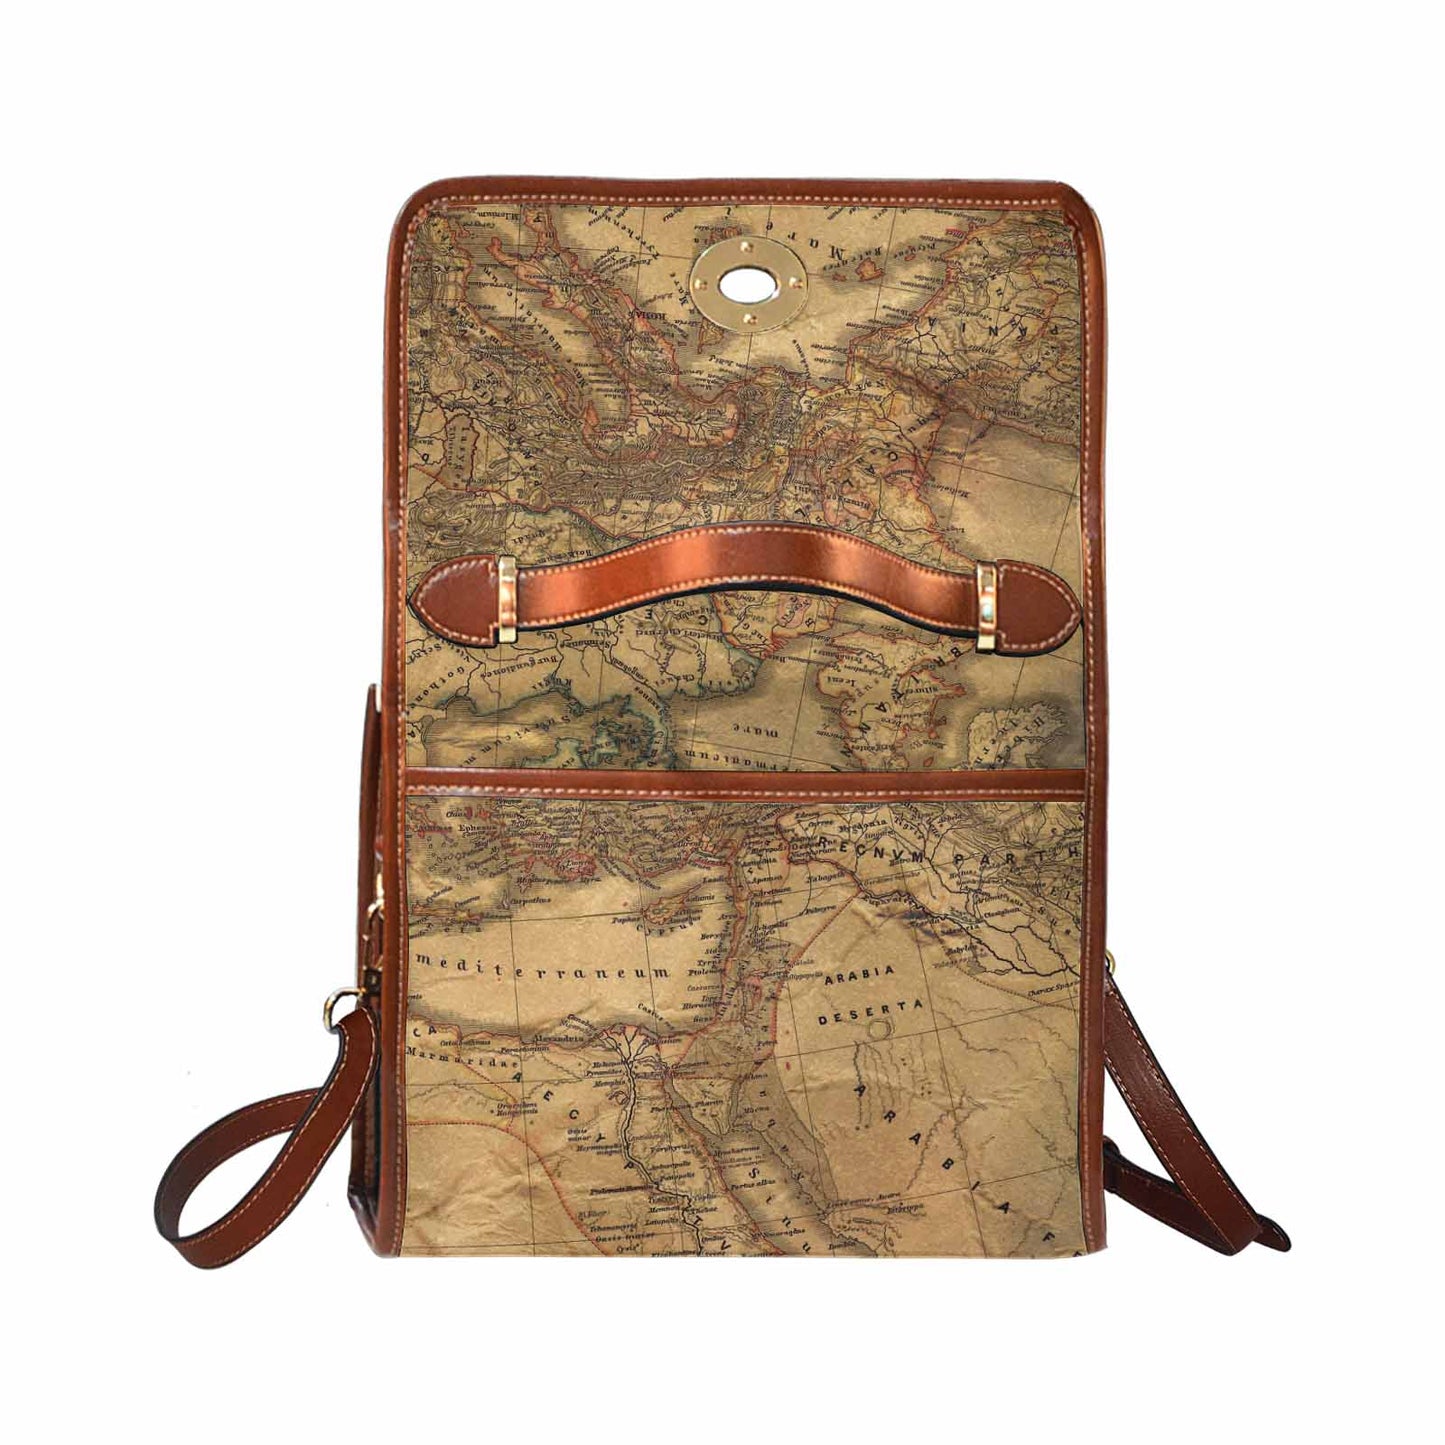 Antique Map Handbag, Model 1695341, Design 21